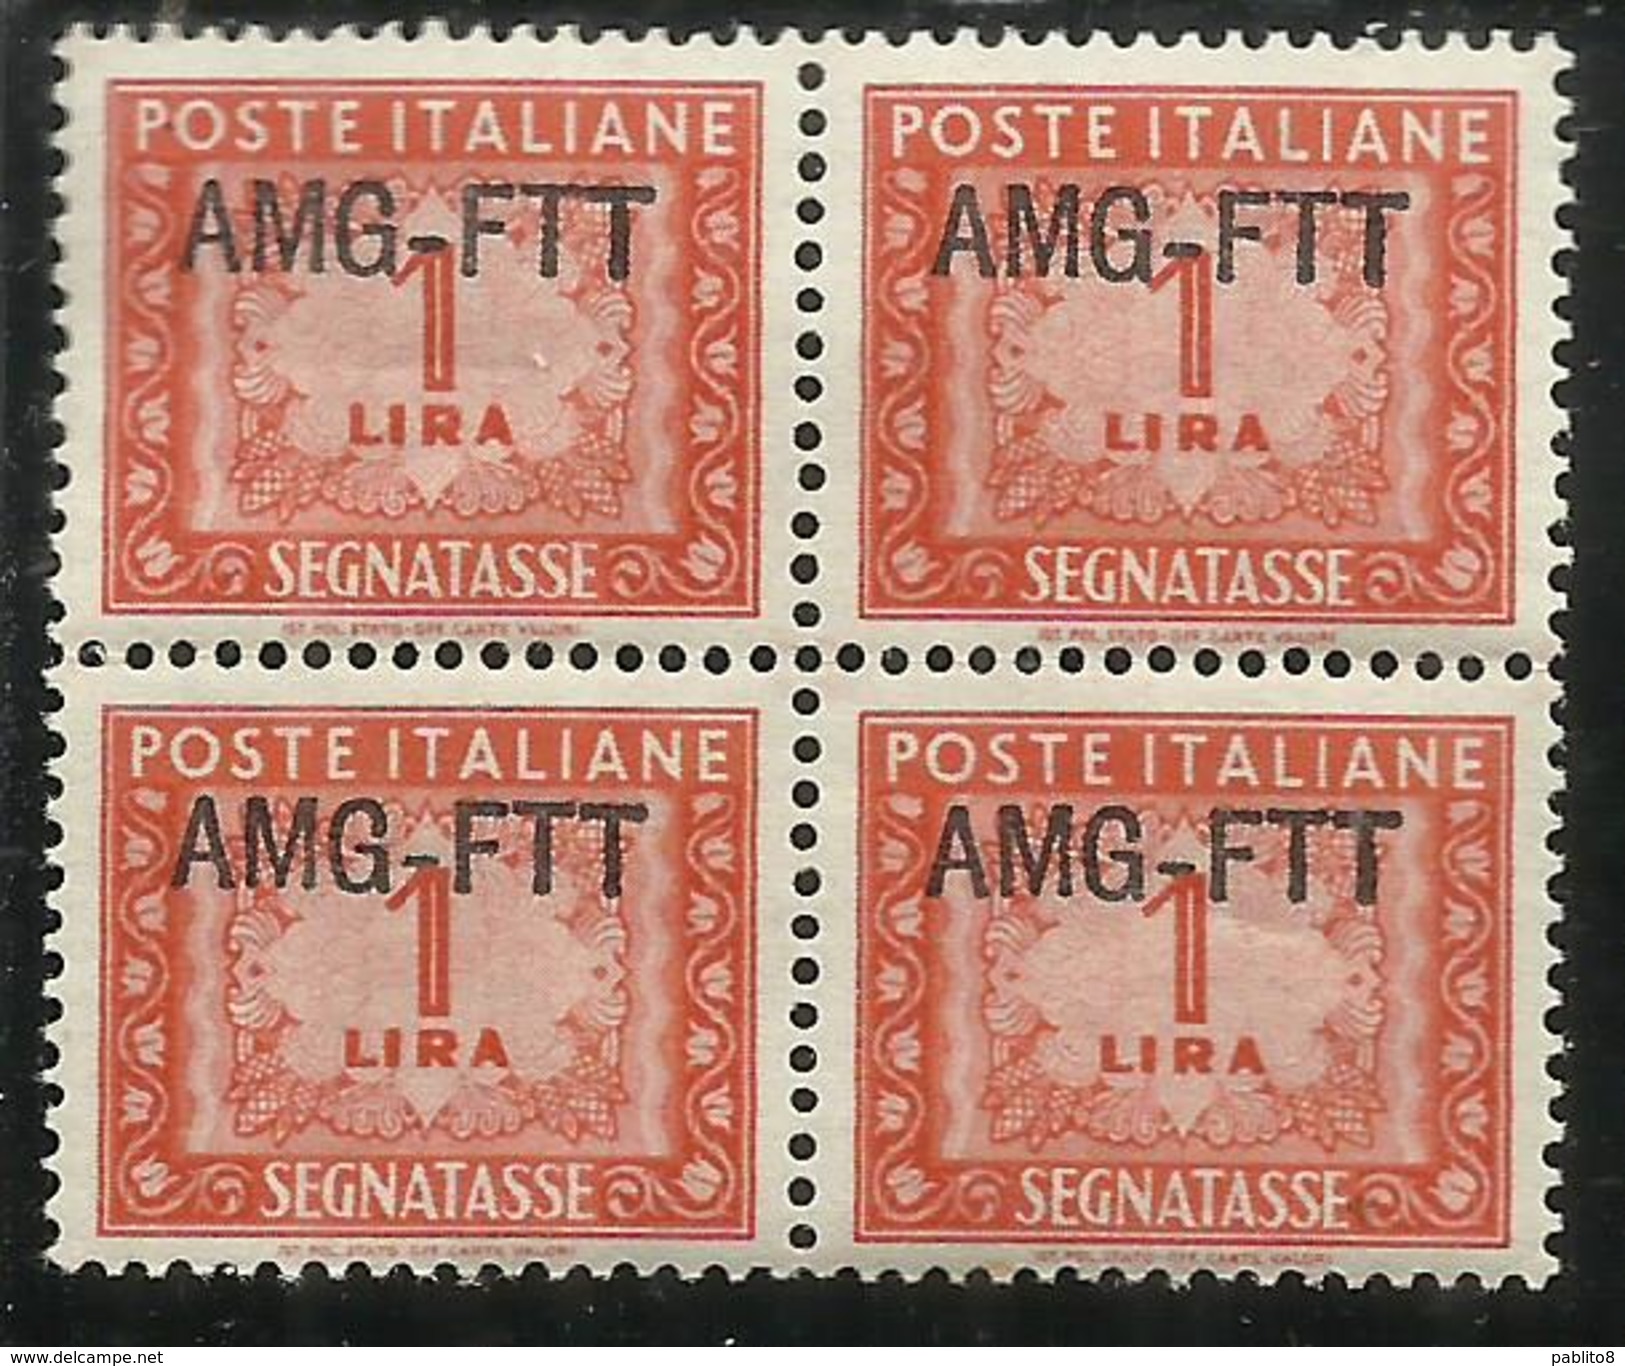 TRIESTE A 1949 1954 AMG-FTT SOPRASTAMPATO D´ITALIA ITALY OVERPRINTED SEGNATASSE POSTAGE DUE TAXES TASSE LIRE 1 MNH - Postage Due